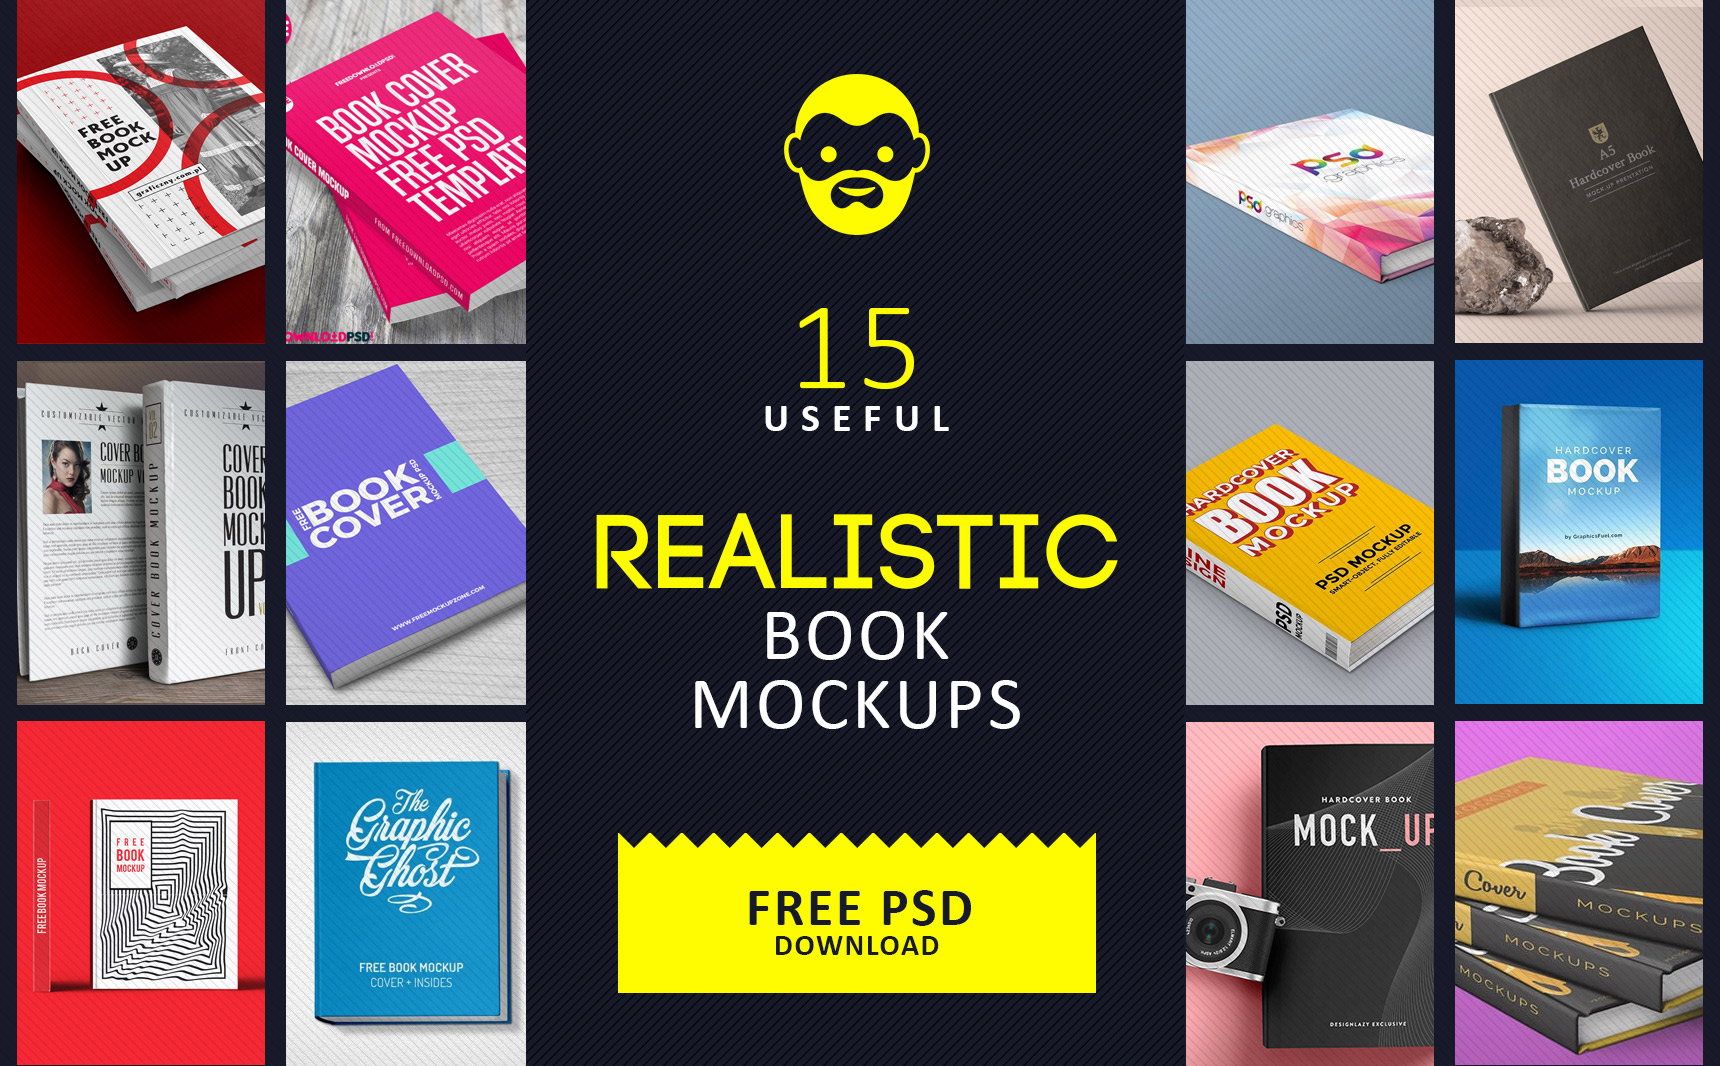 15 Useful Realistic Book Mockups Free Psd Psddaddy Com